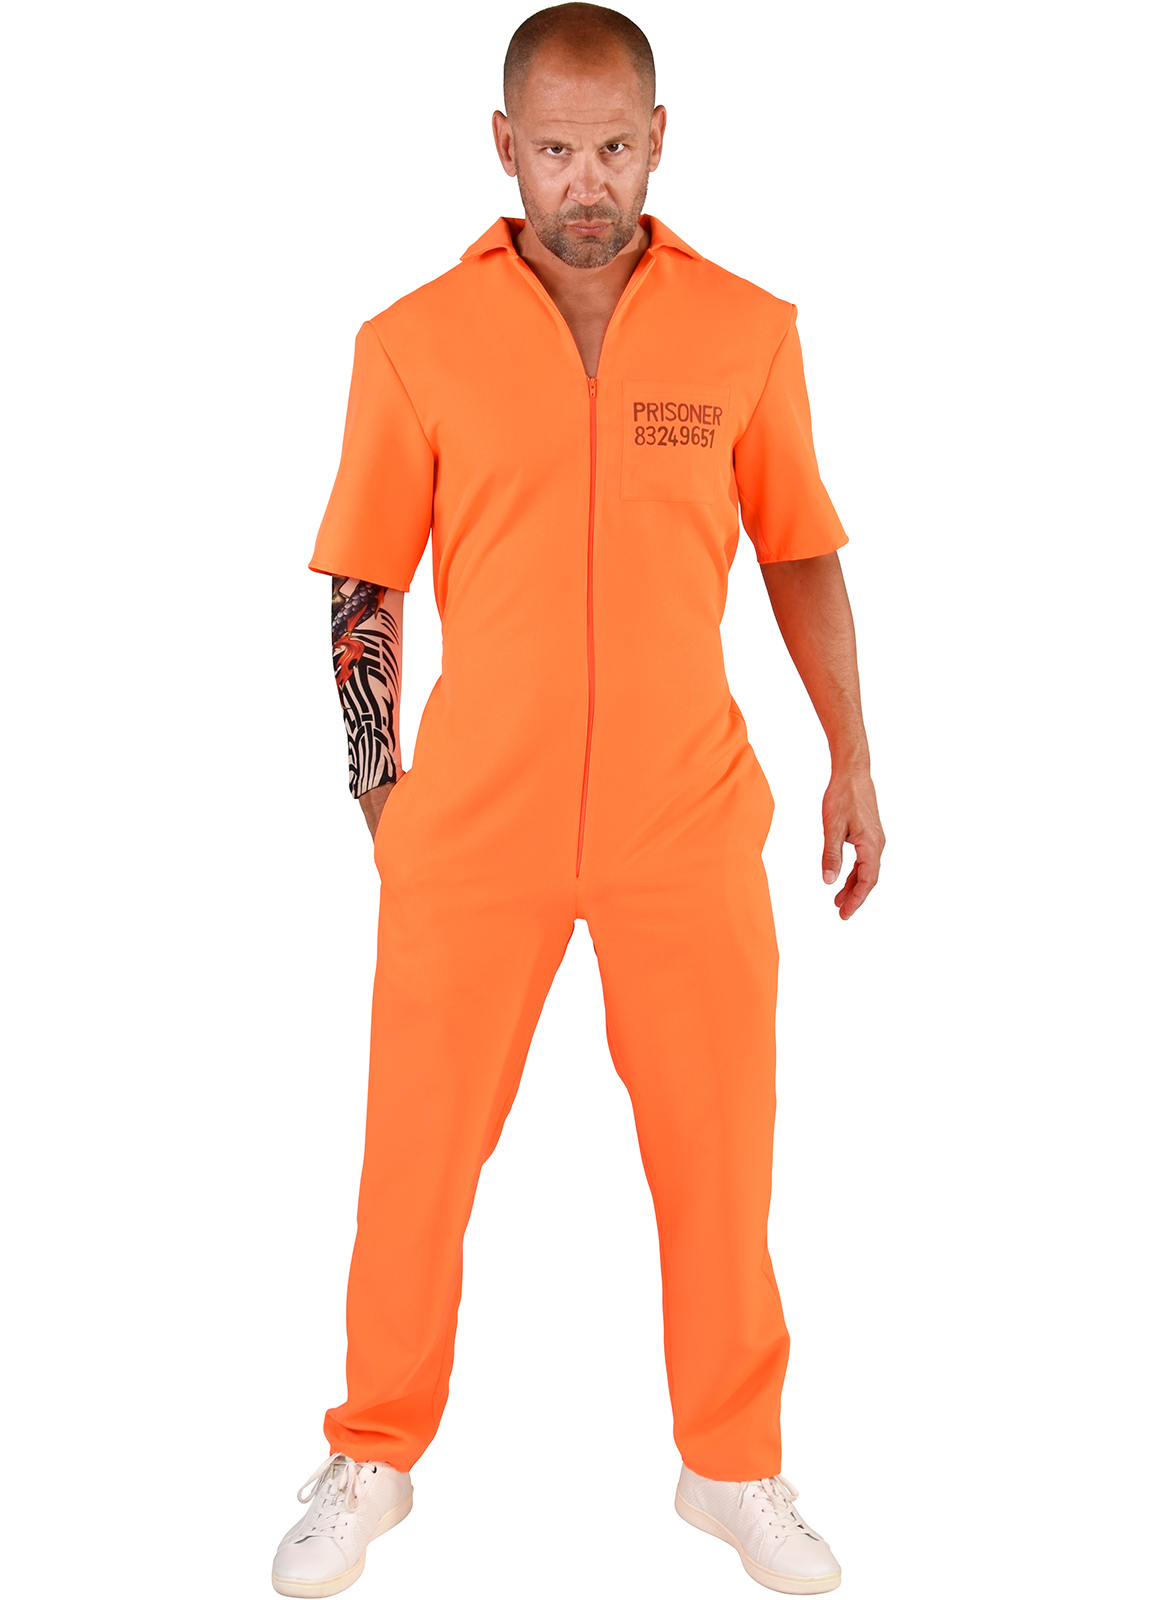 Boevenpak oranje jumpsuit